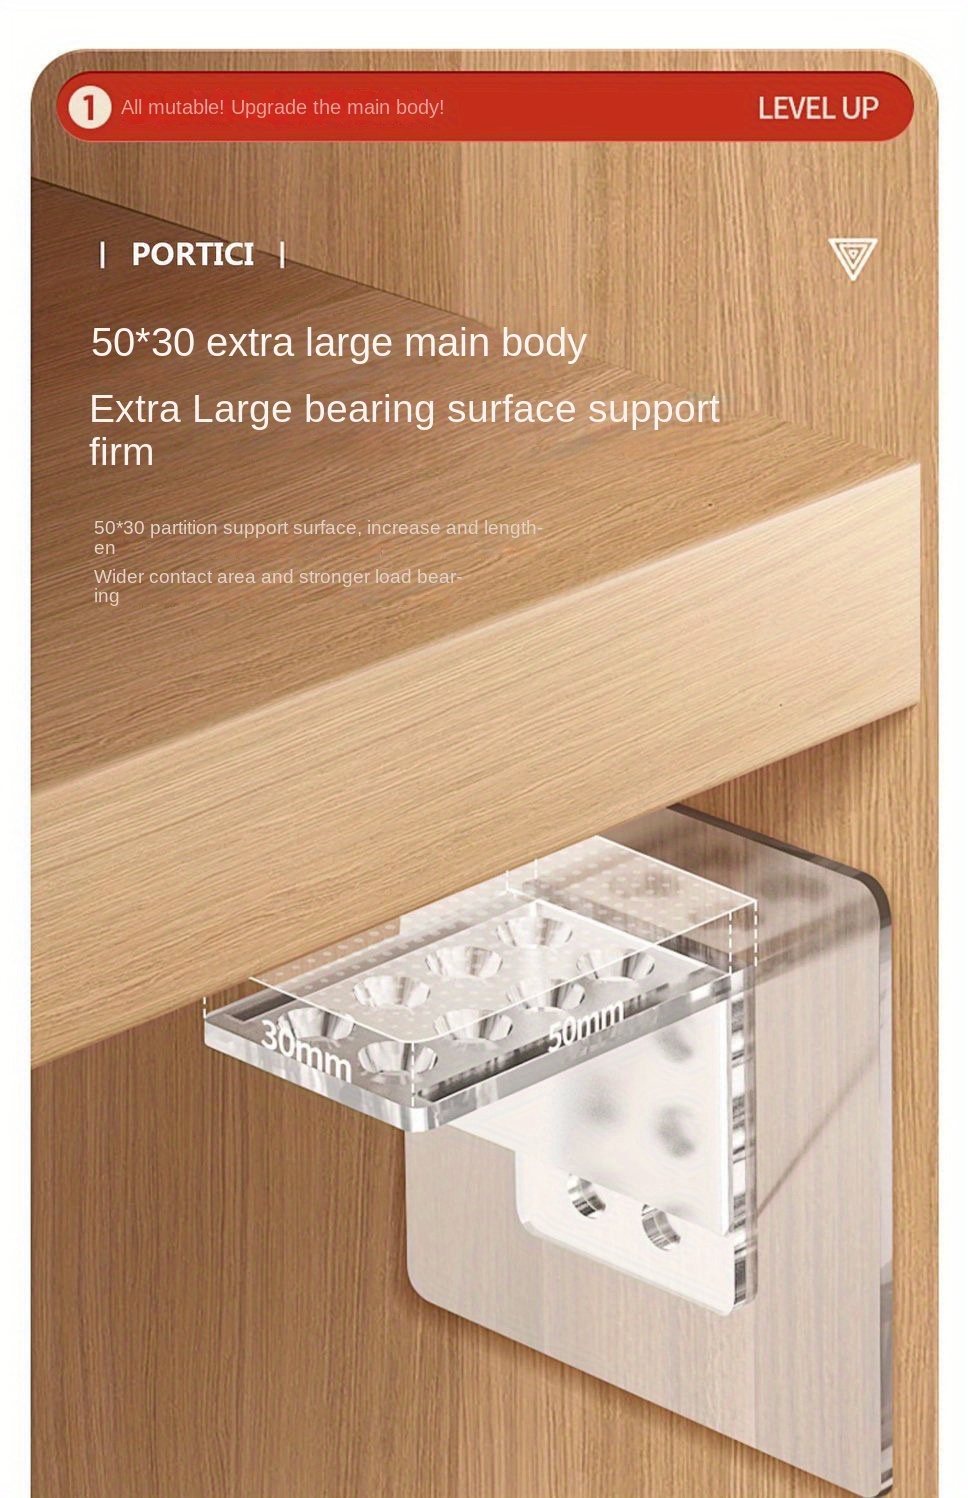 XATDOMESD Adhesive Shelf Bracket, Self Adhesive Shelf Support Pegs, Punch Free Shelf Pins, Shelf Clips for Cabinet Clapboard, 8 Pack